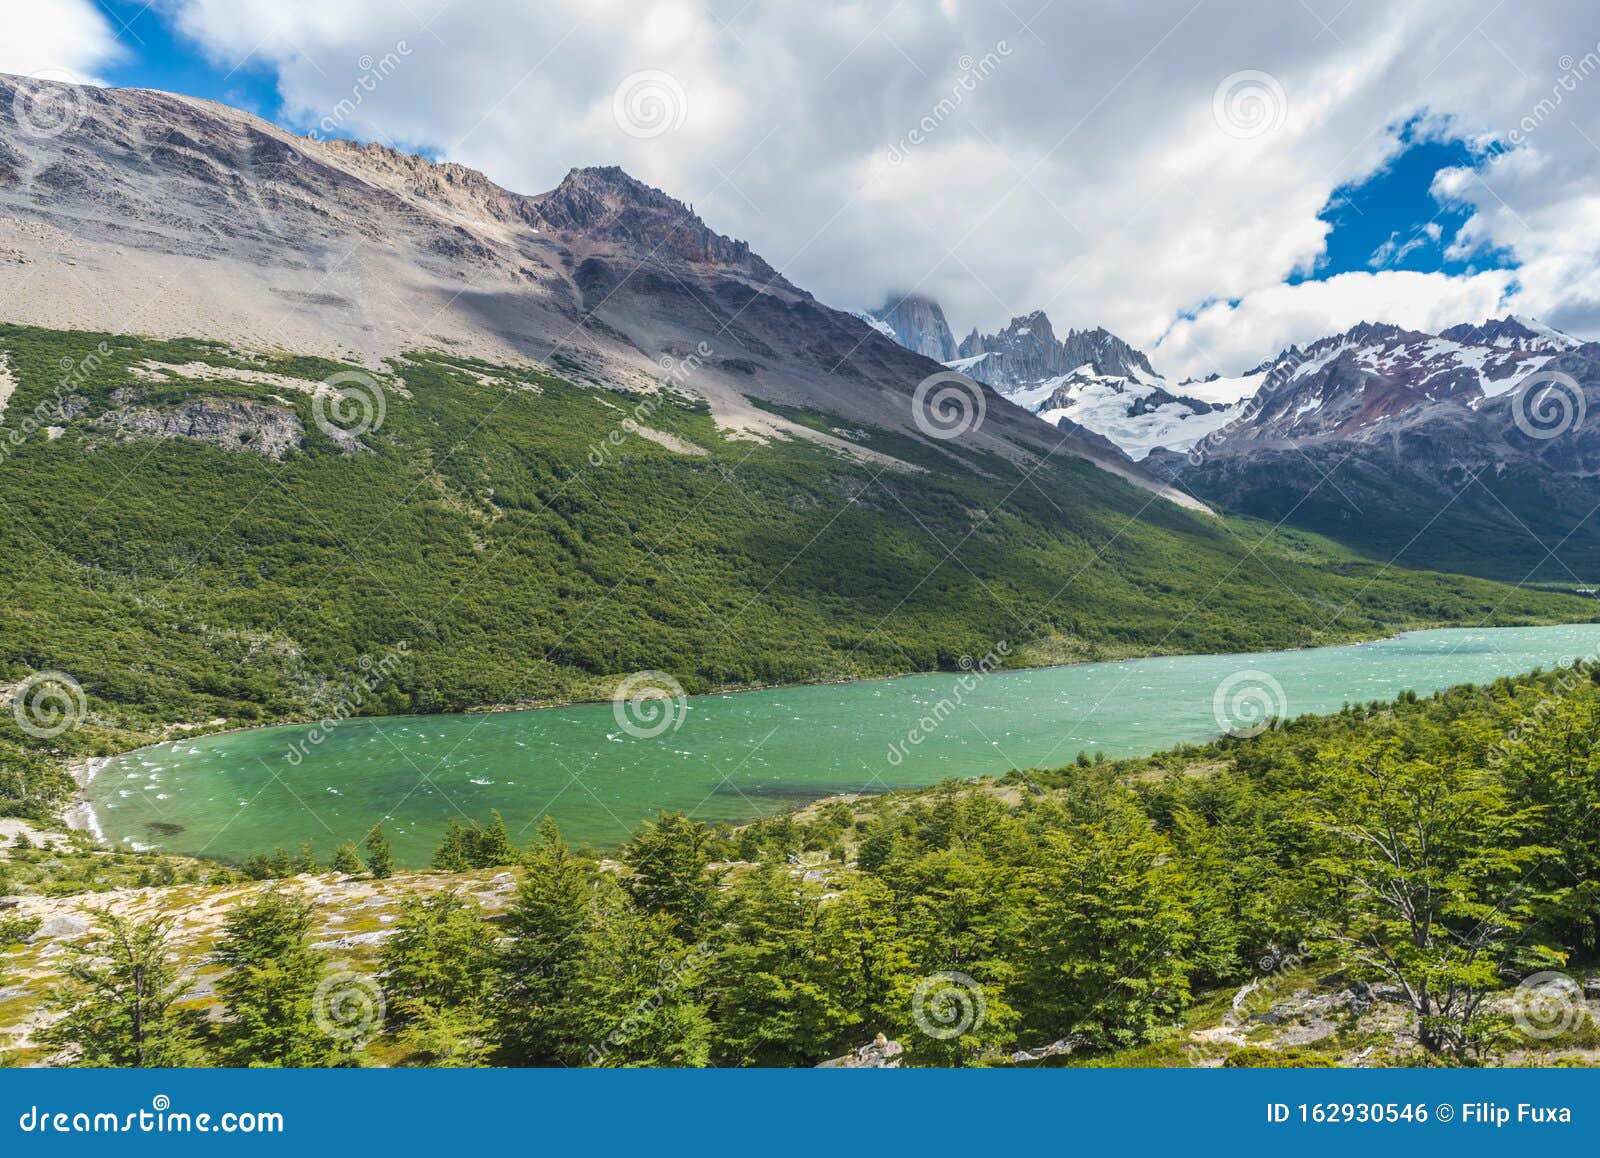 lagunas madre e hija lake in los glaciares national park in argentina